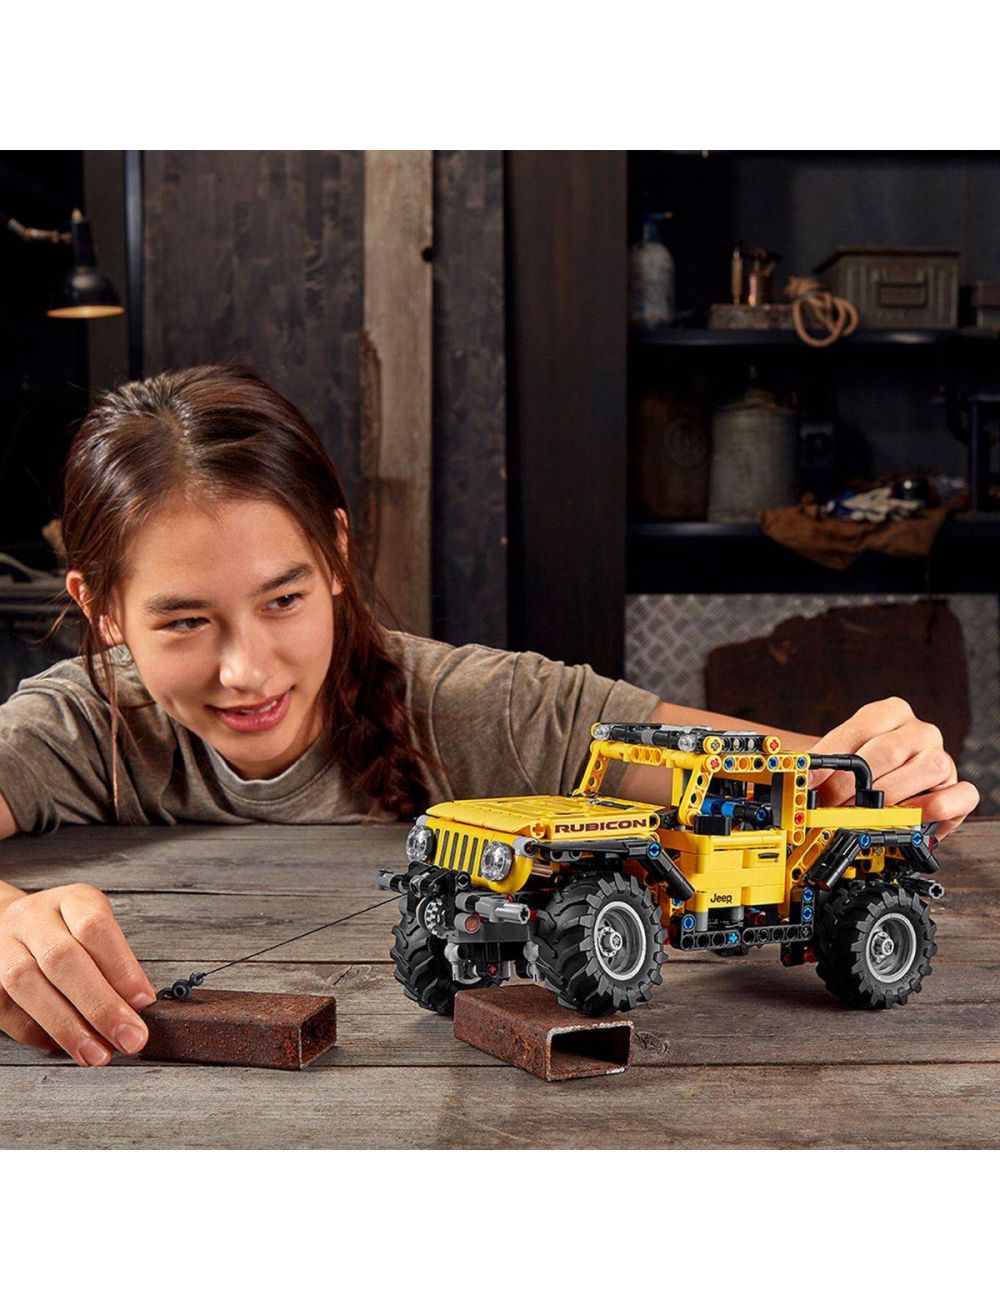 LEGO Technic Jeep Wrangler model 42122